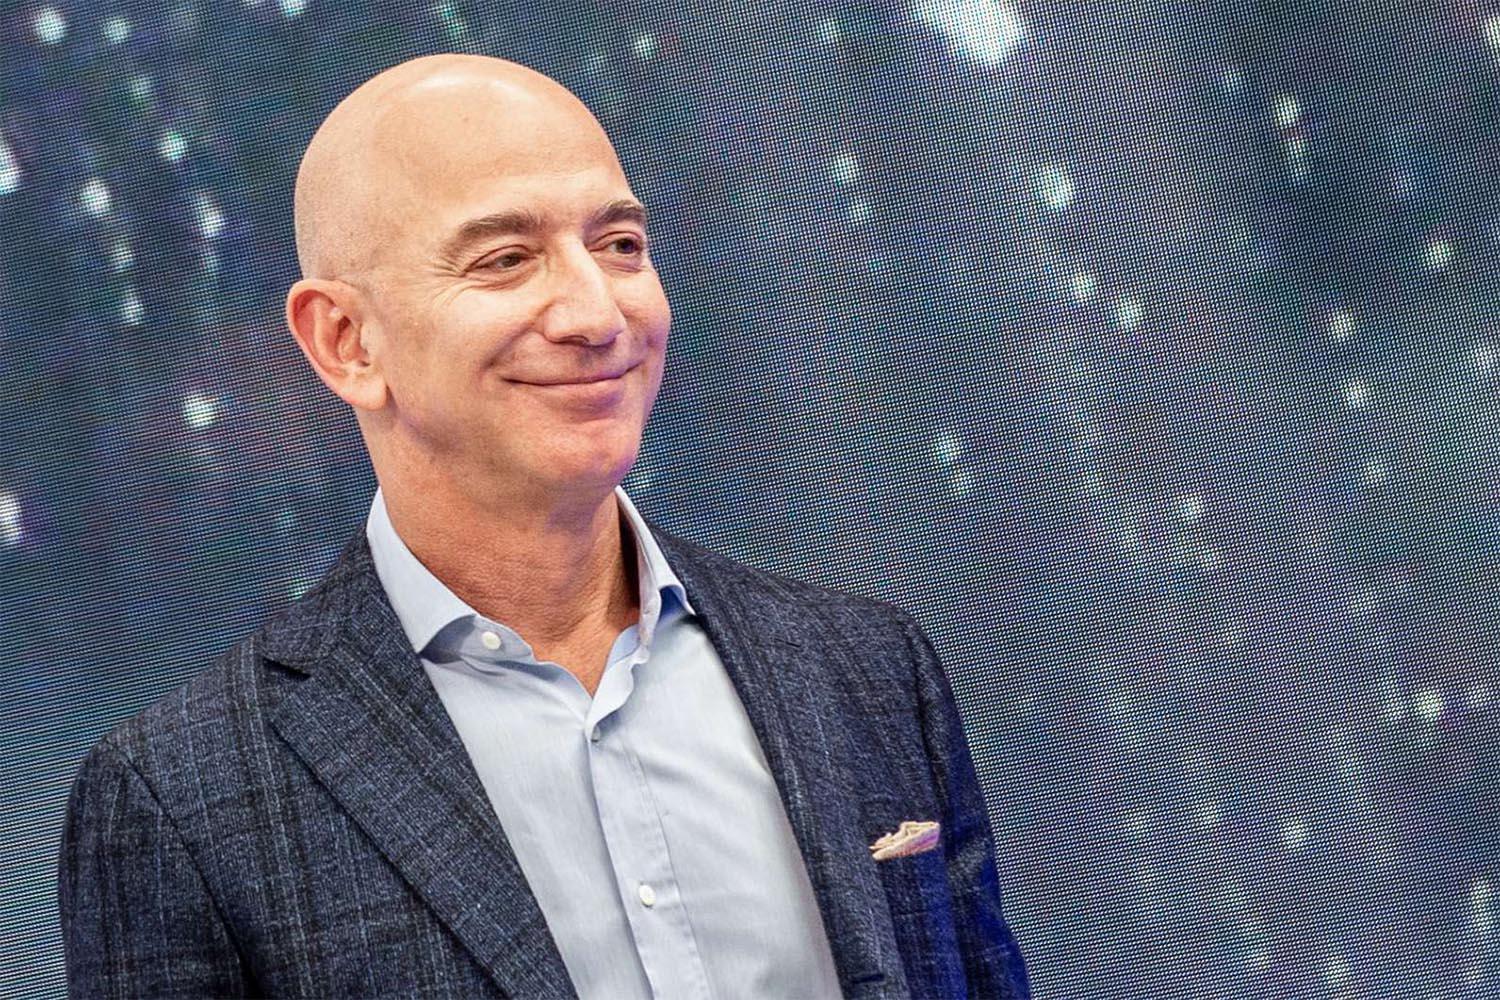 Amazon and Washington Post owner Jeff Bezos